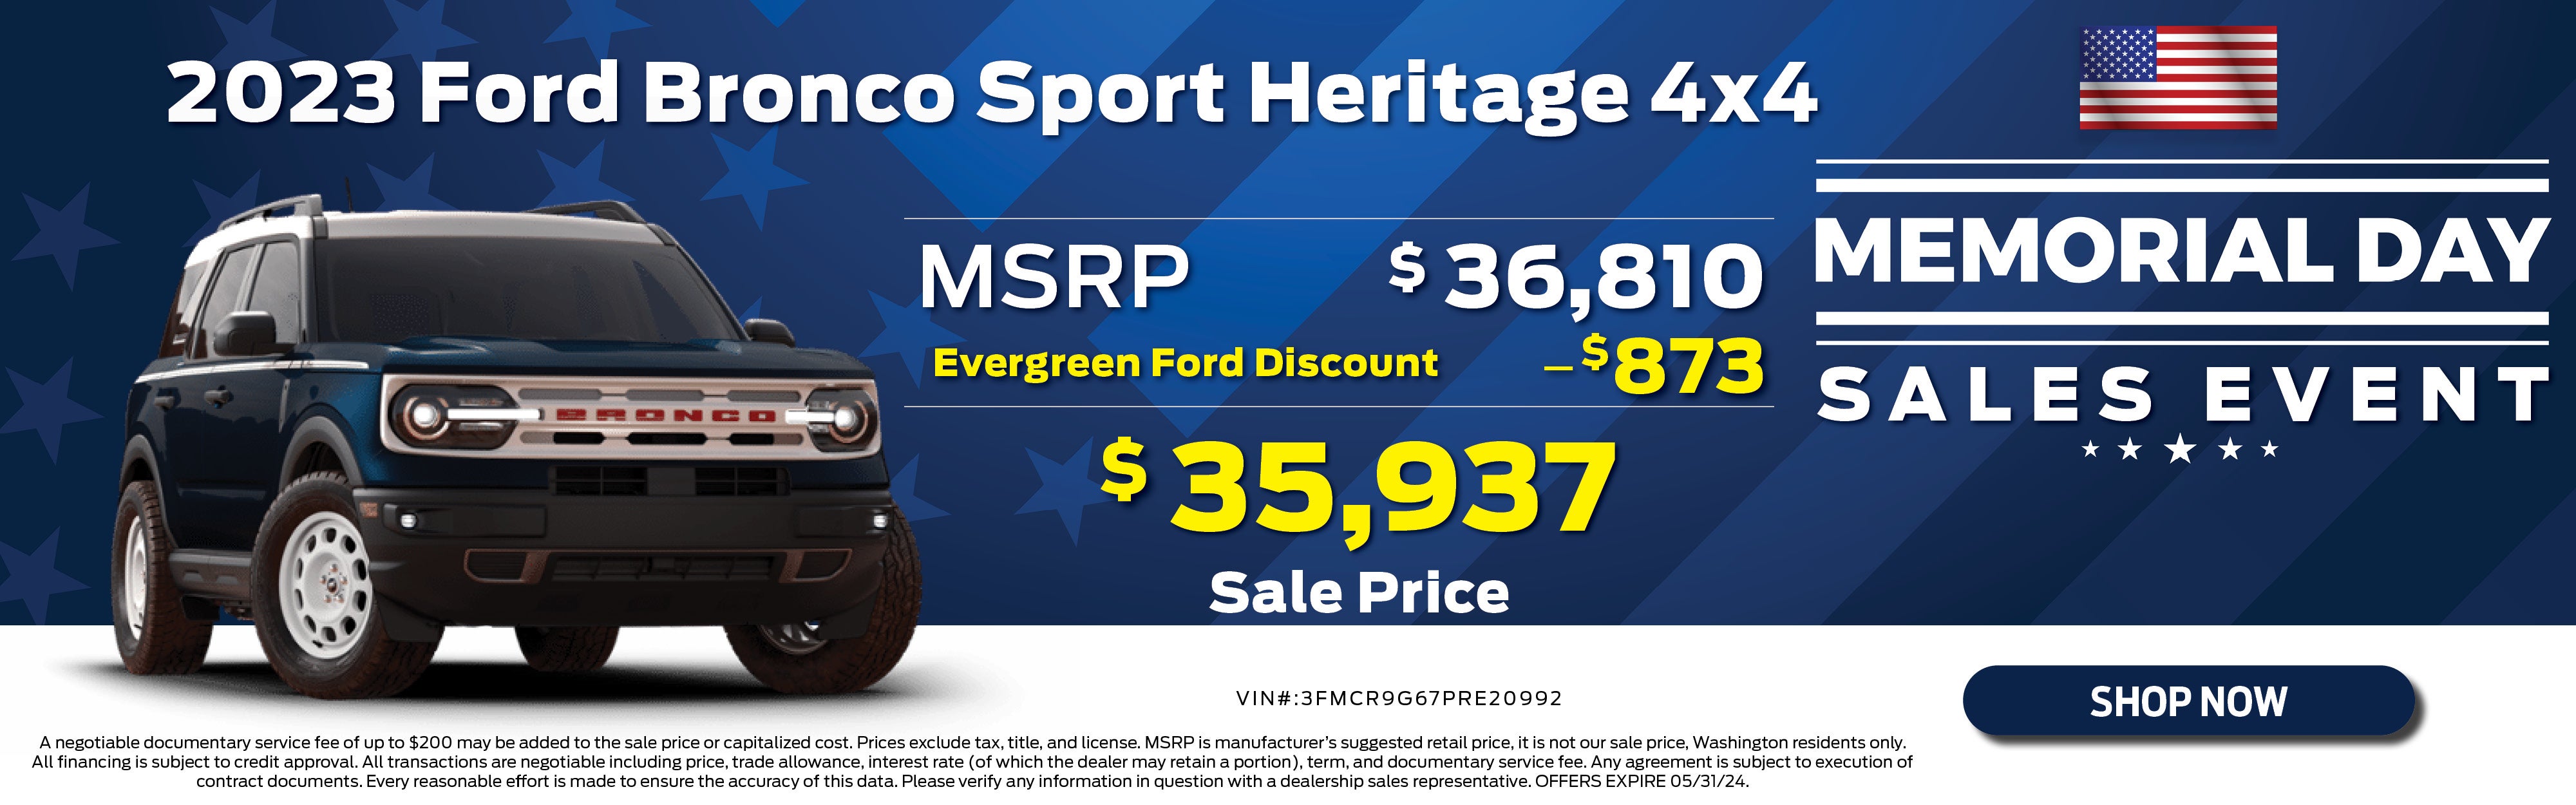 2023 Bronco Sport Heritage 4x4